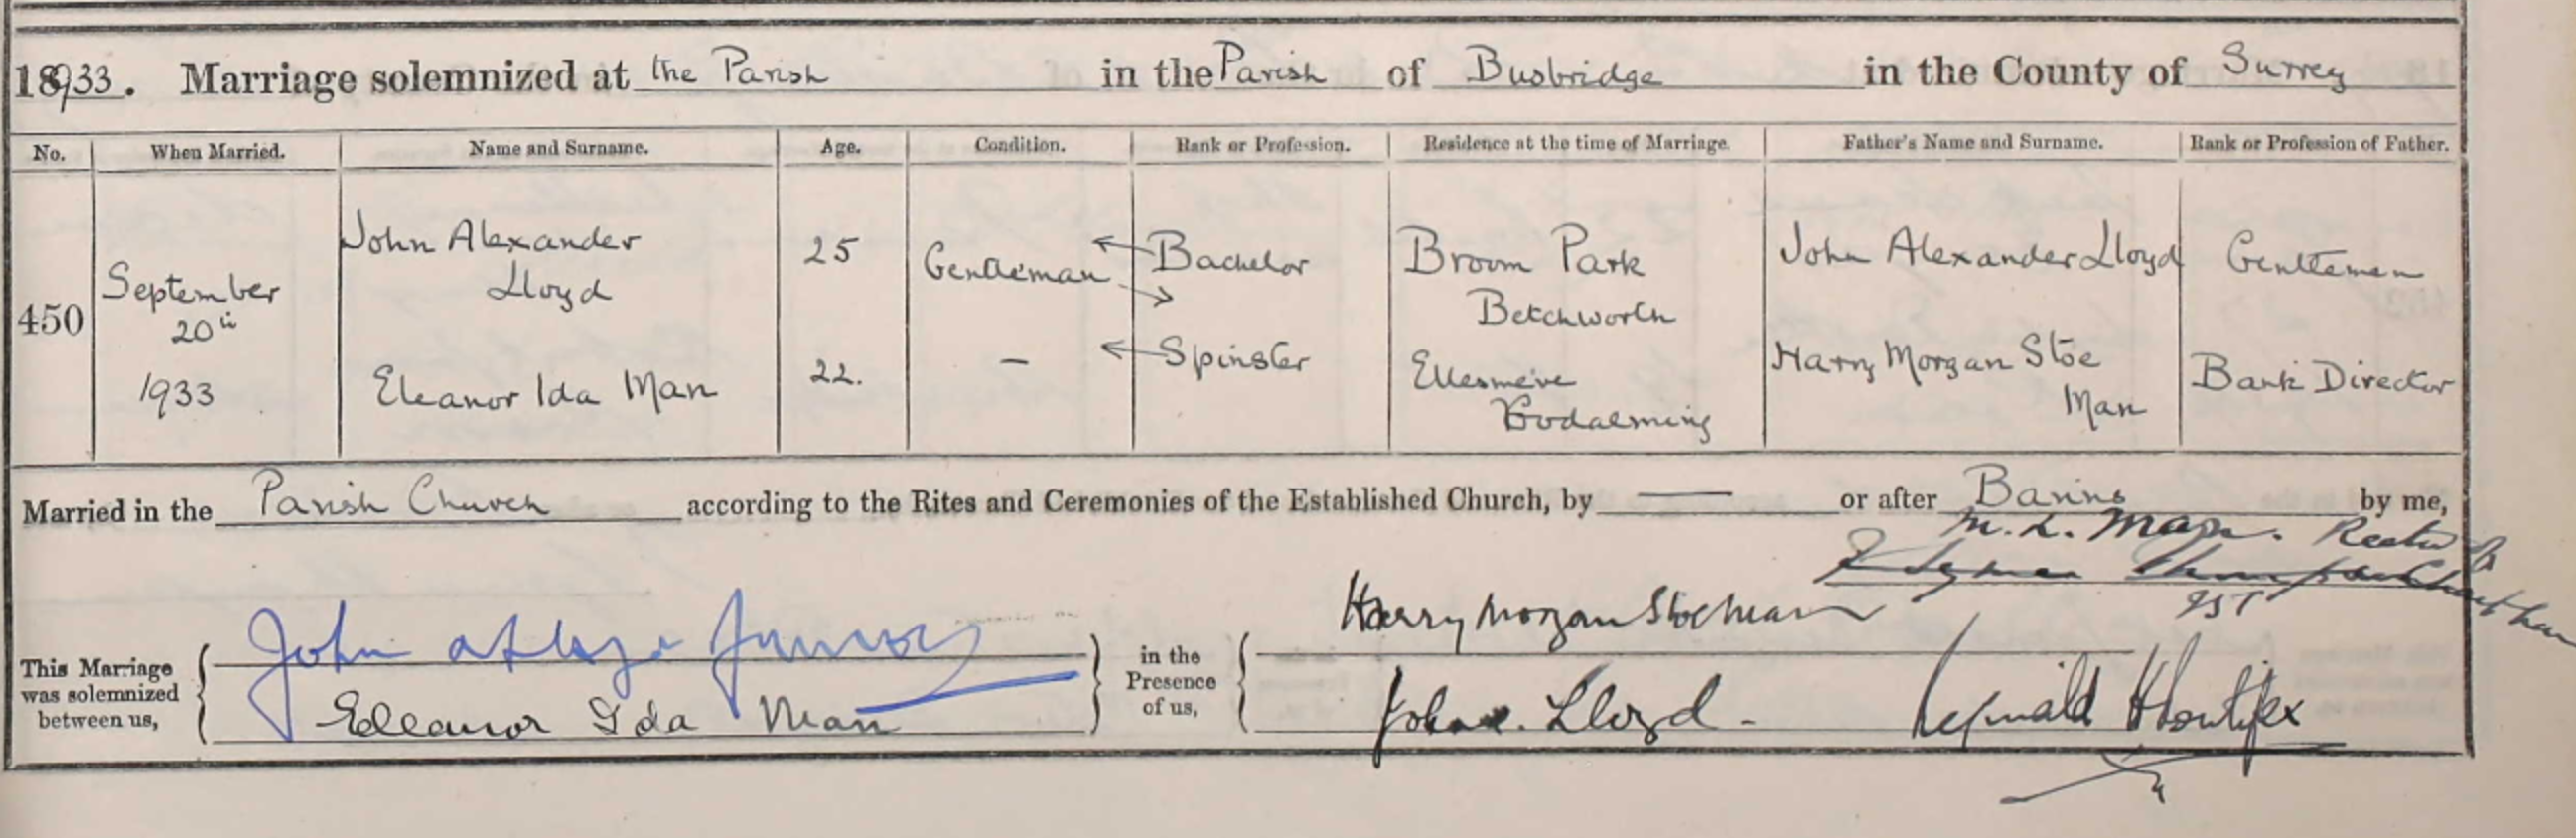 Eleanor Man and John Lloyd Marriage Record